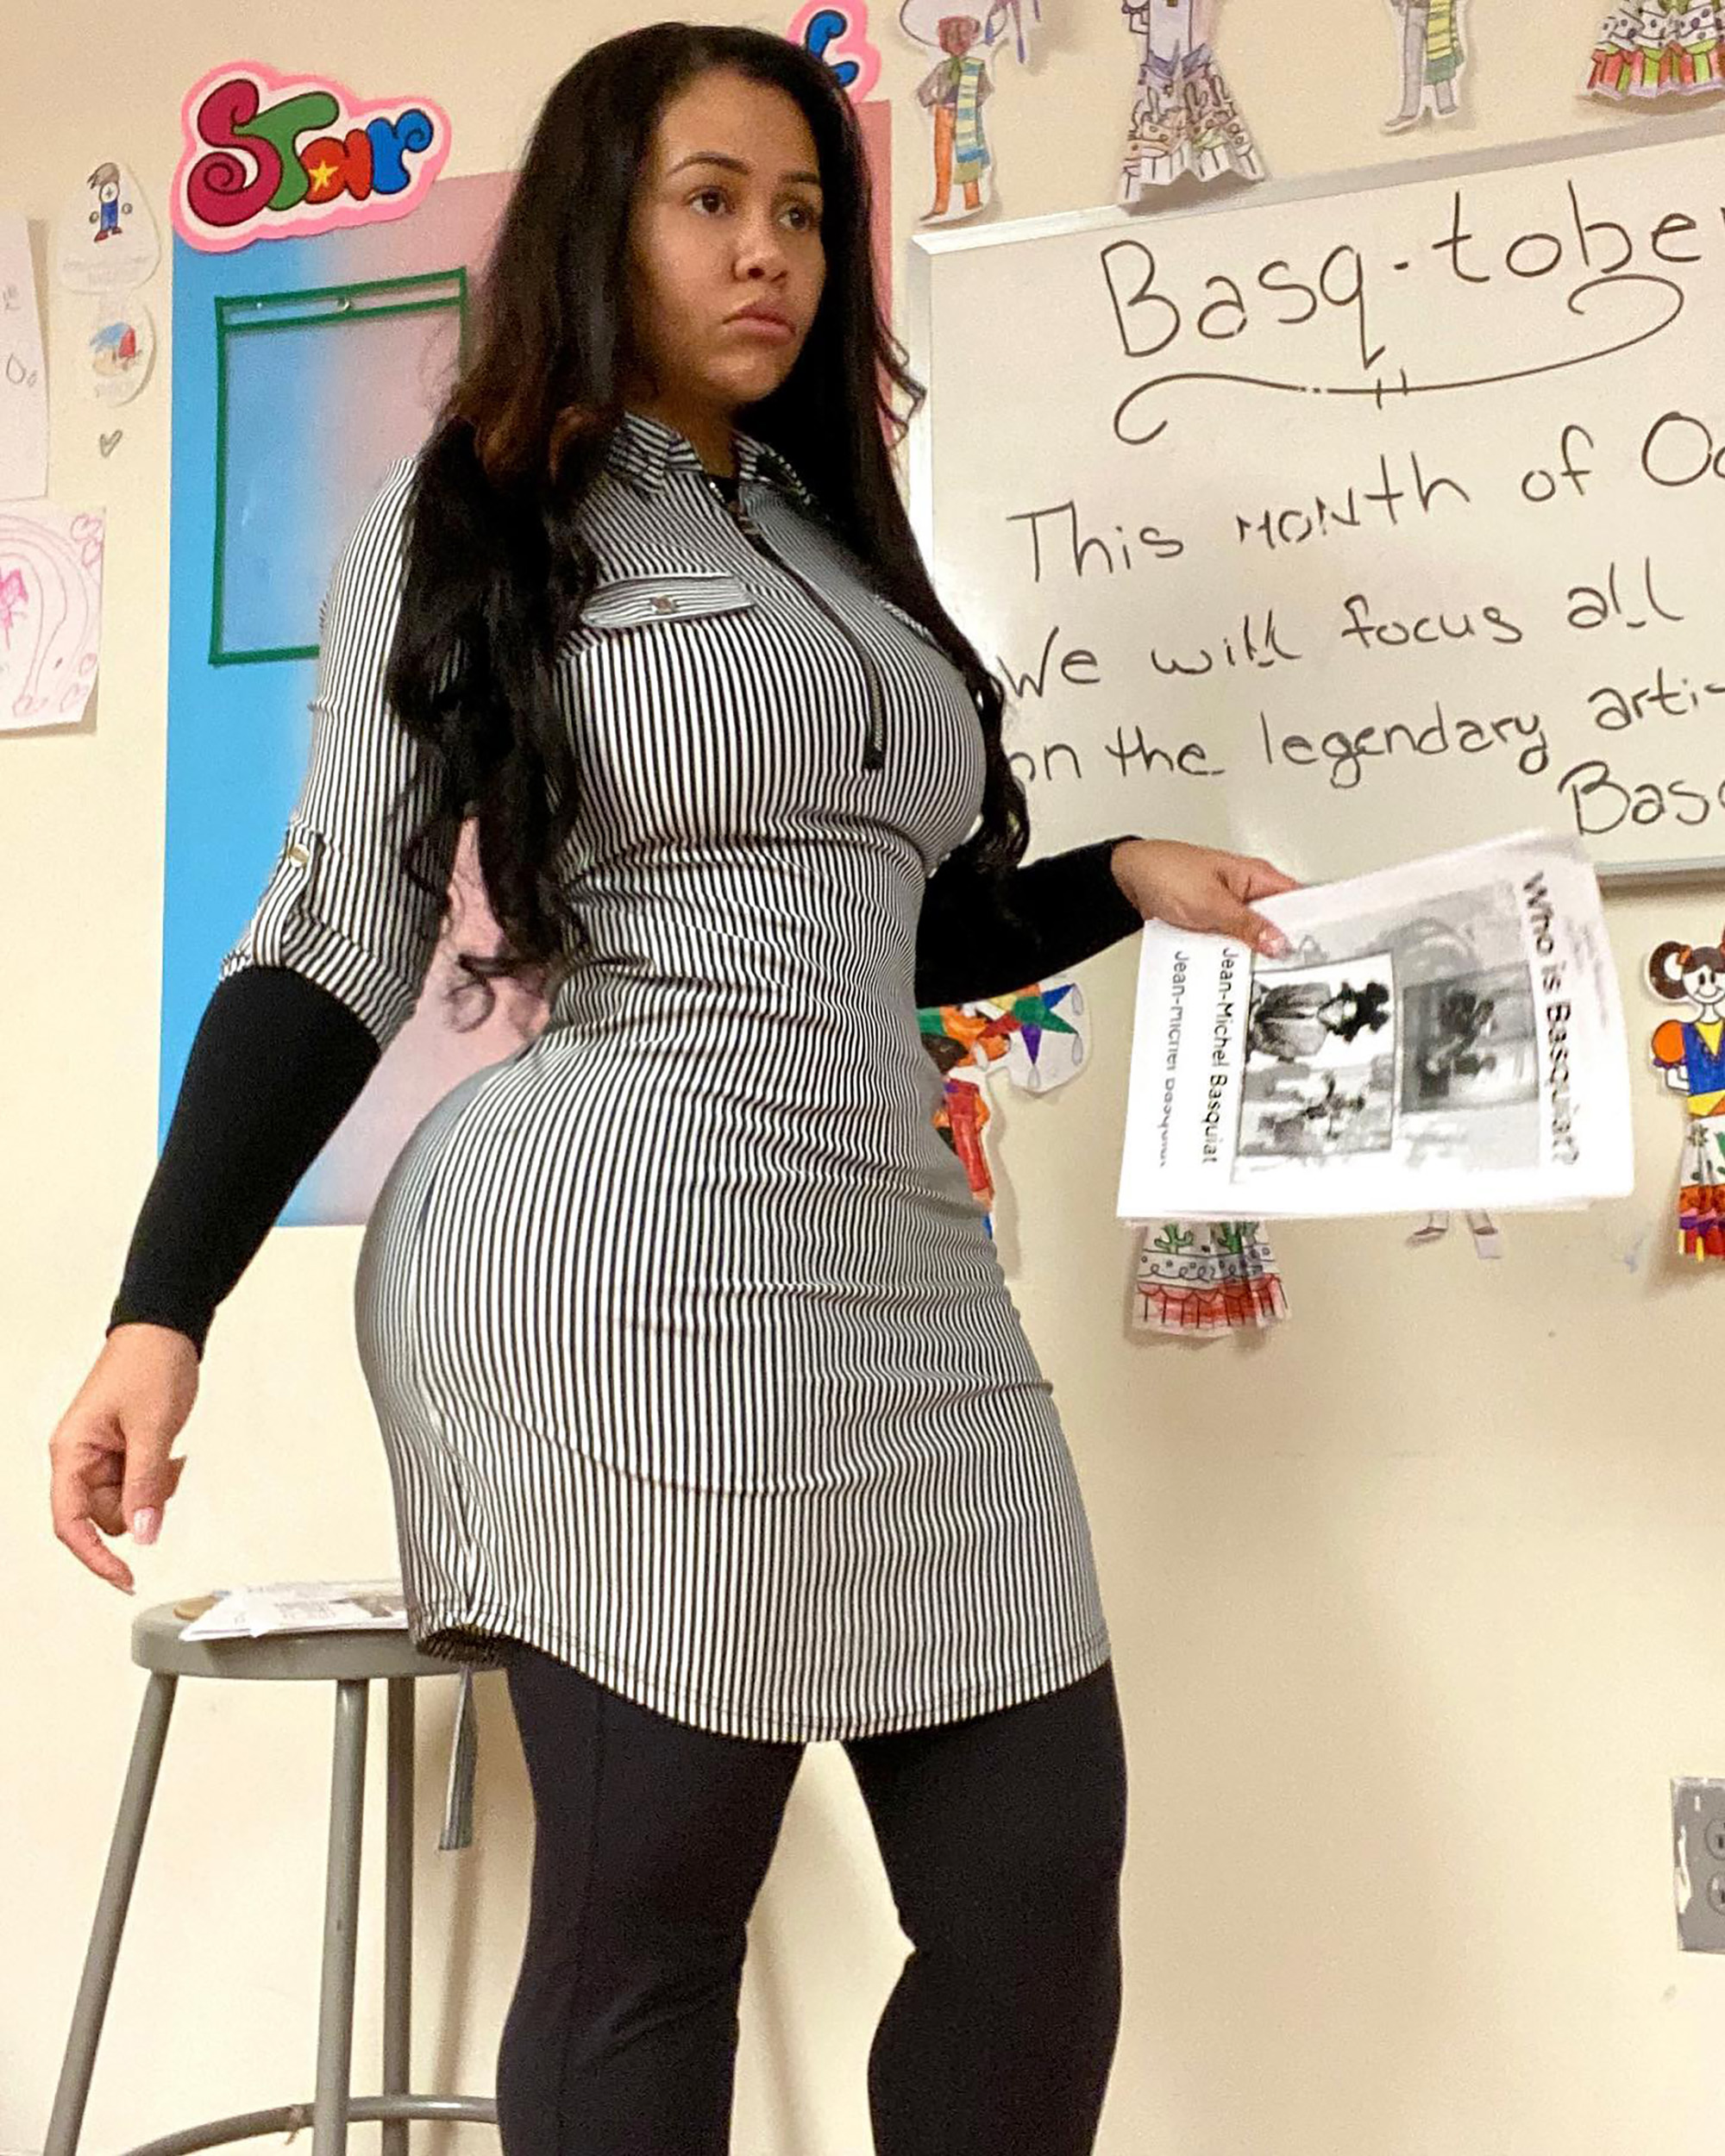 chris kachmar recommends big butt black teacher pic